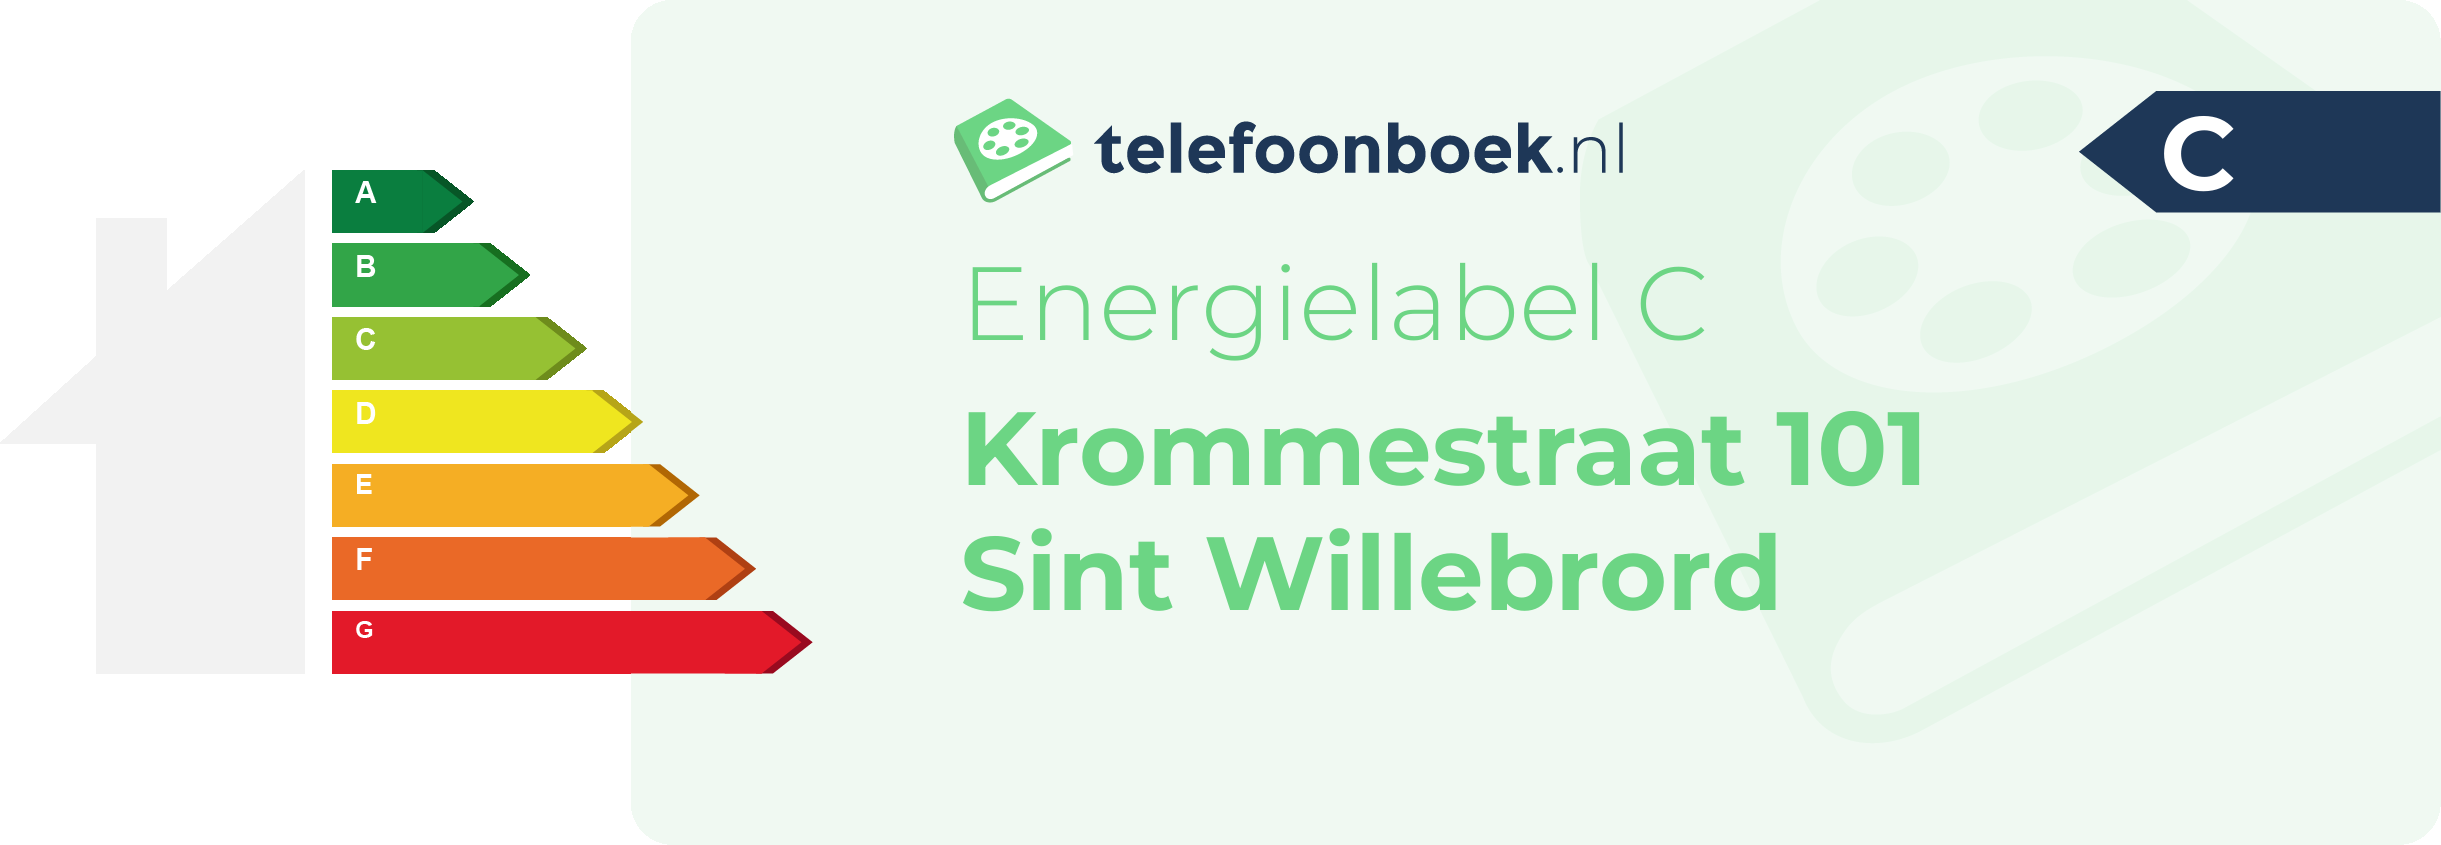 Energielabel Krommestraat 101 Sint Willebrord